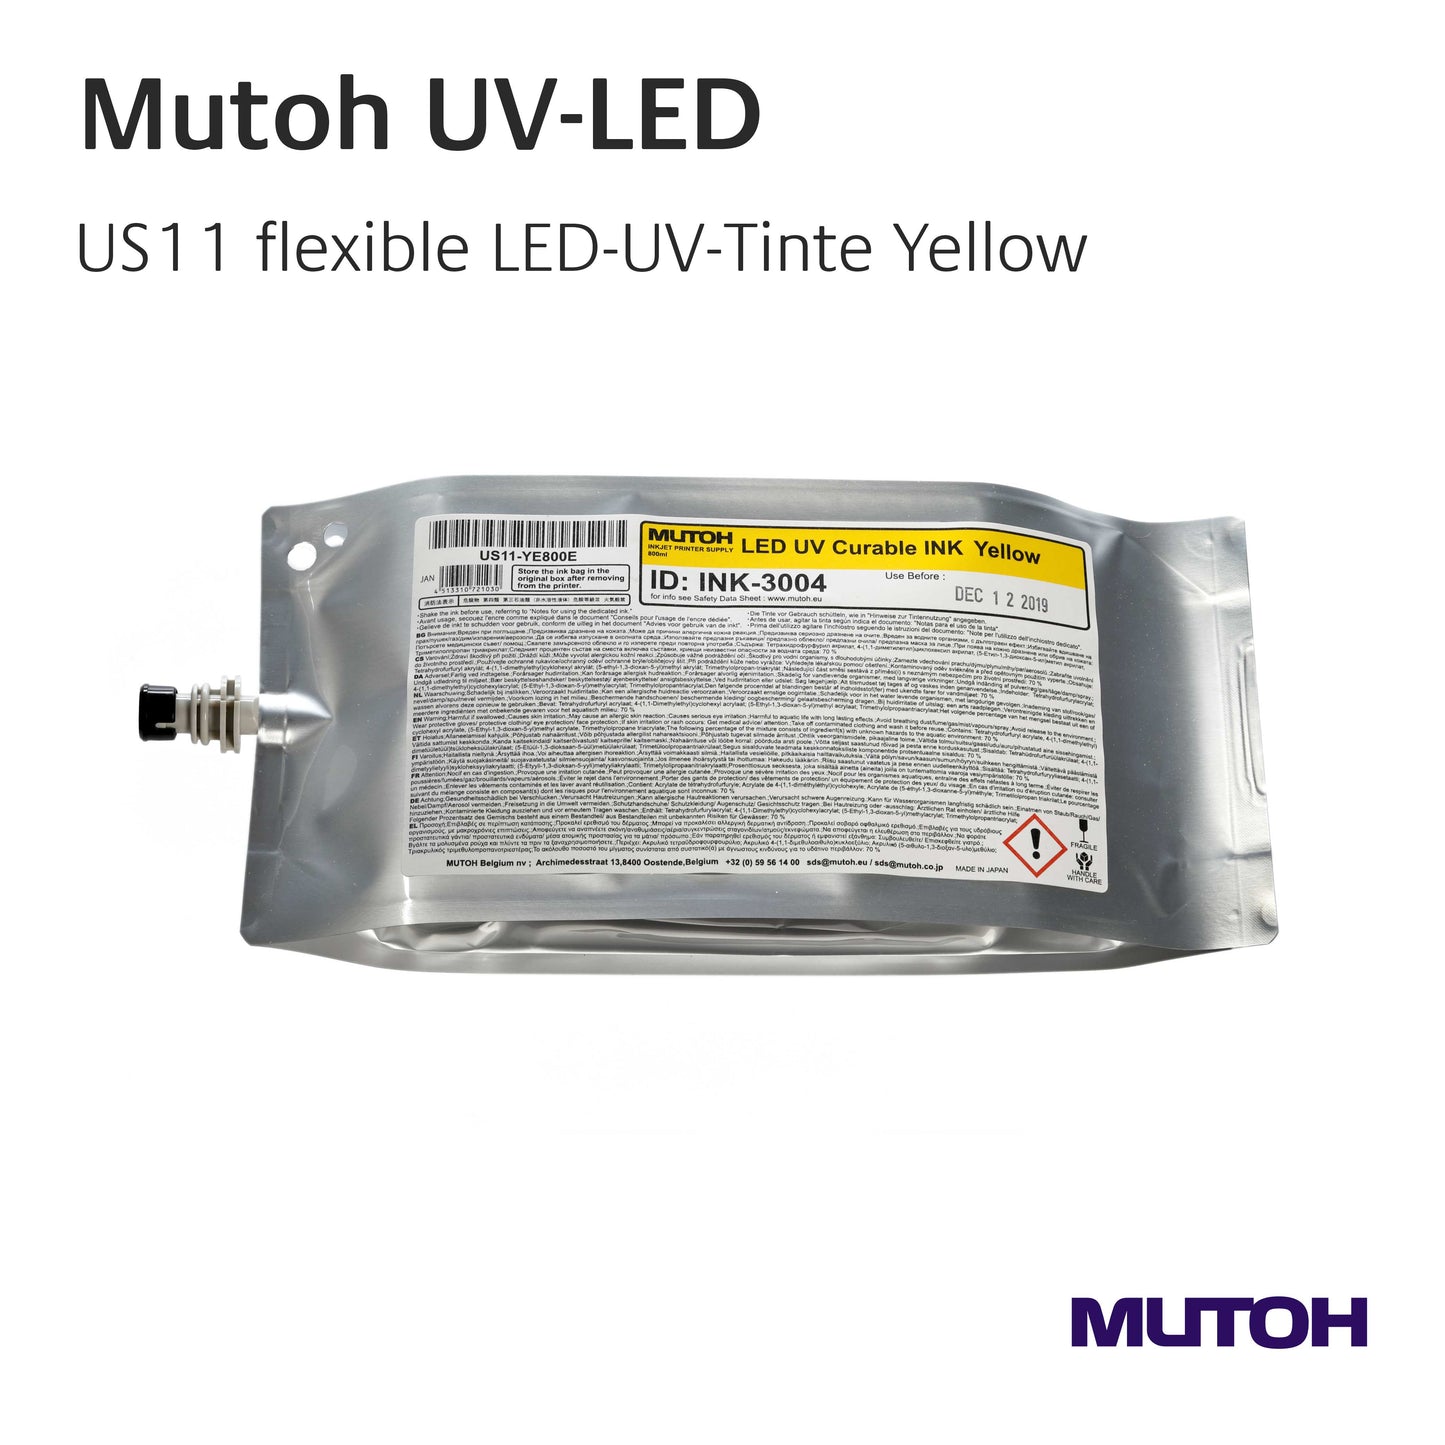 Mutoh - US11 flexible LED-UV-Tinten